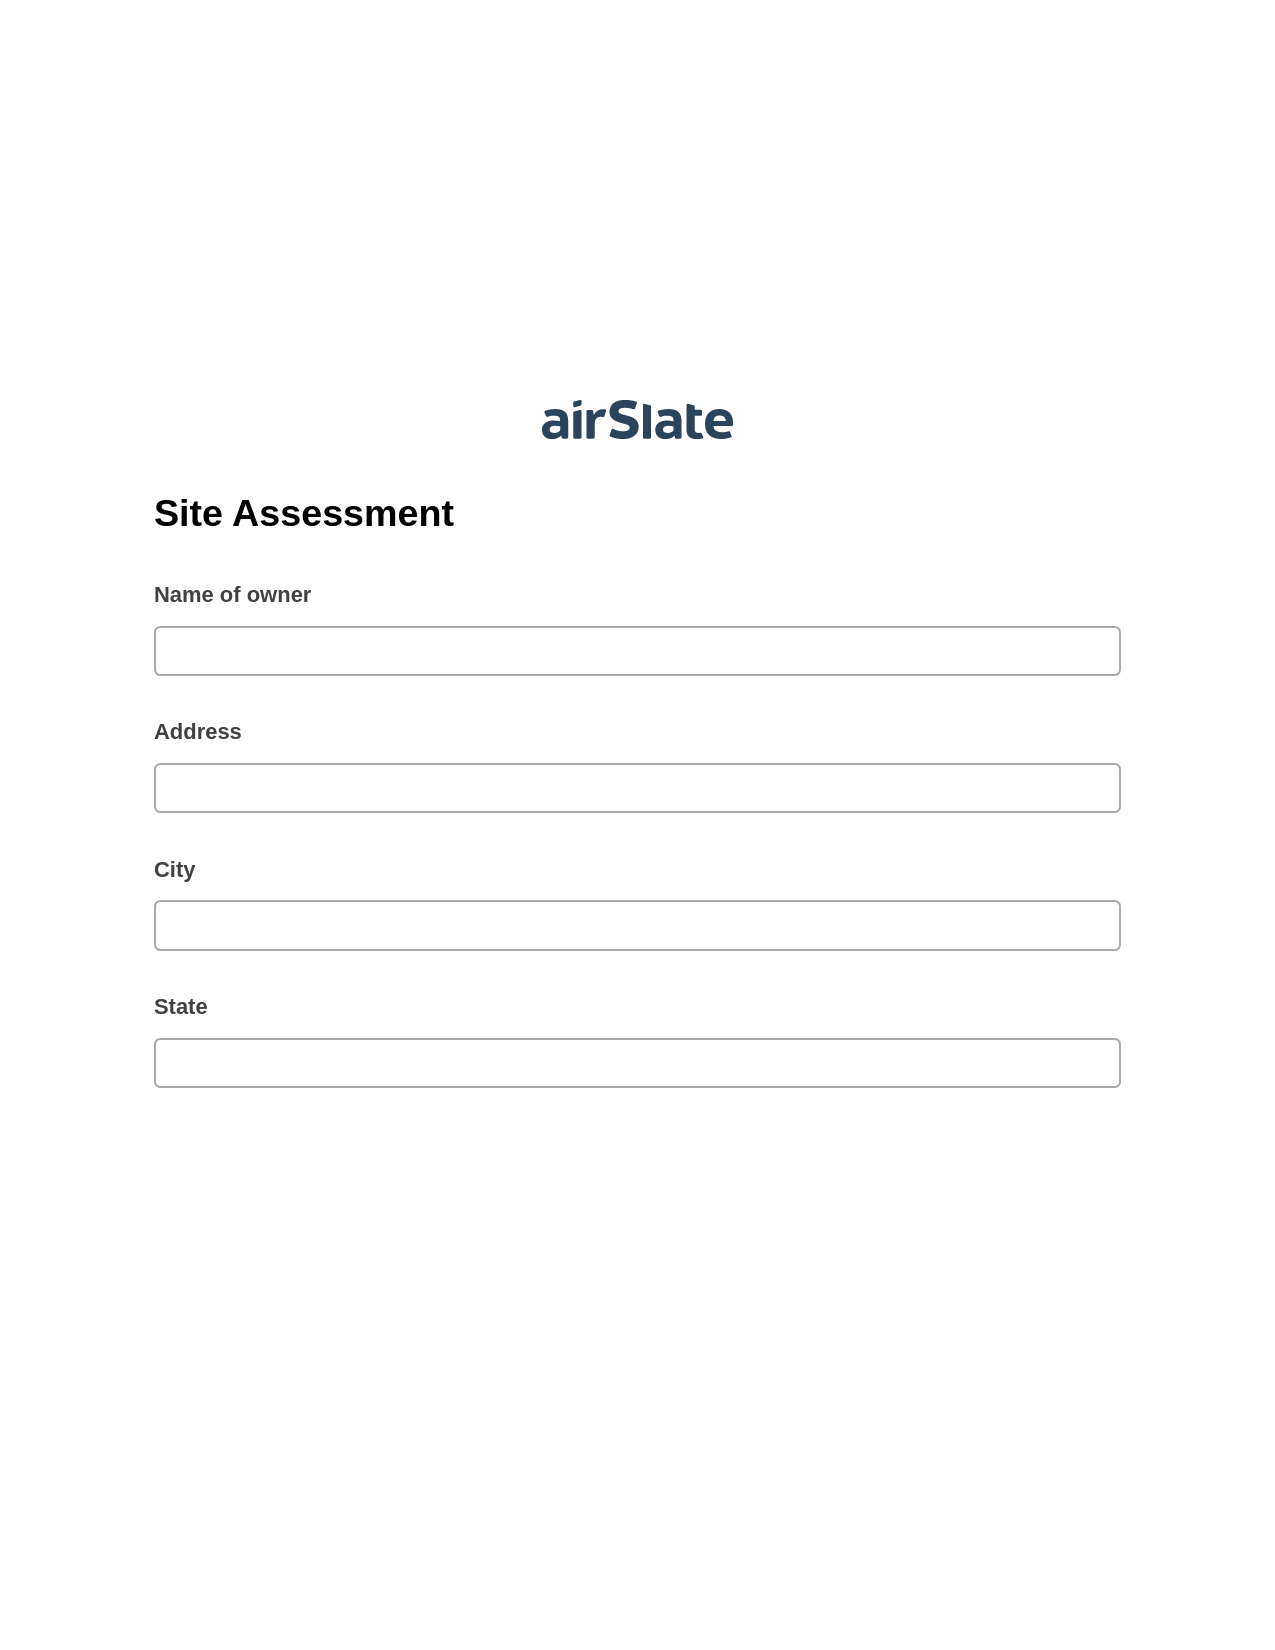 Multirole Site Assessment Pre-fill from Excel Spreadsheet Bot, SendGrid send Campaign bot, Export to Google Sheet Bot